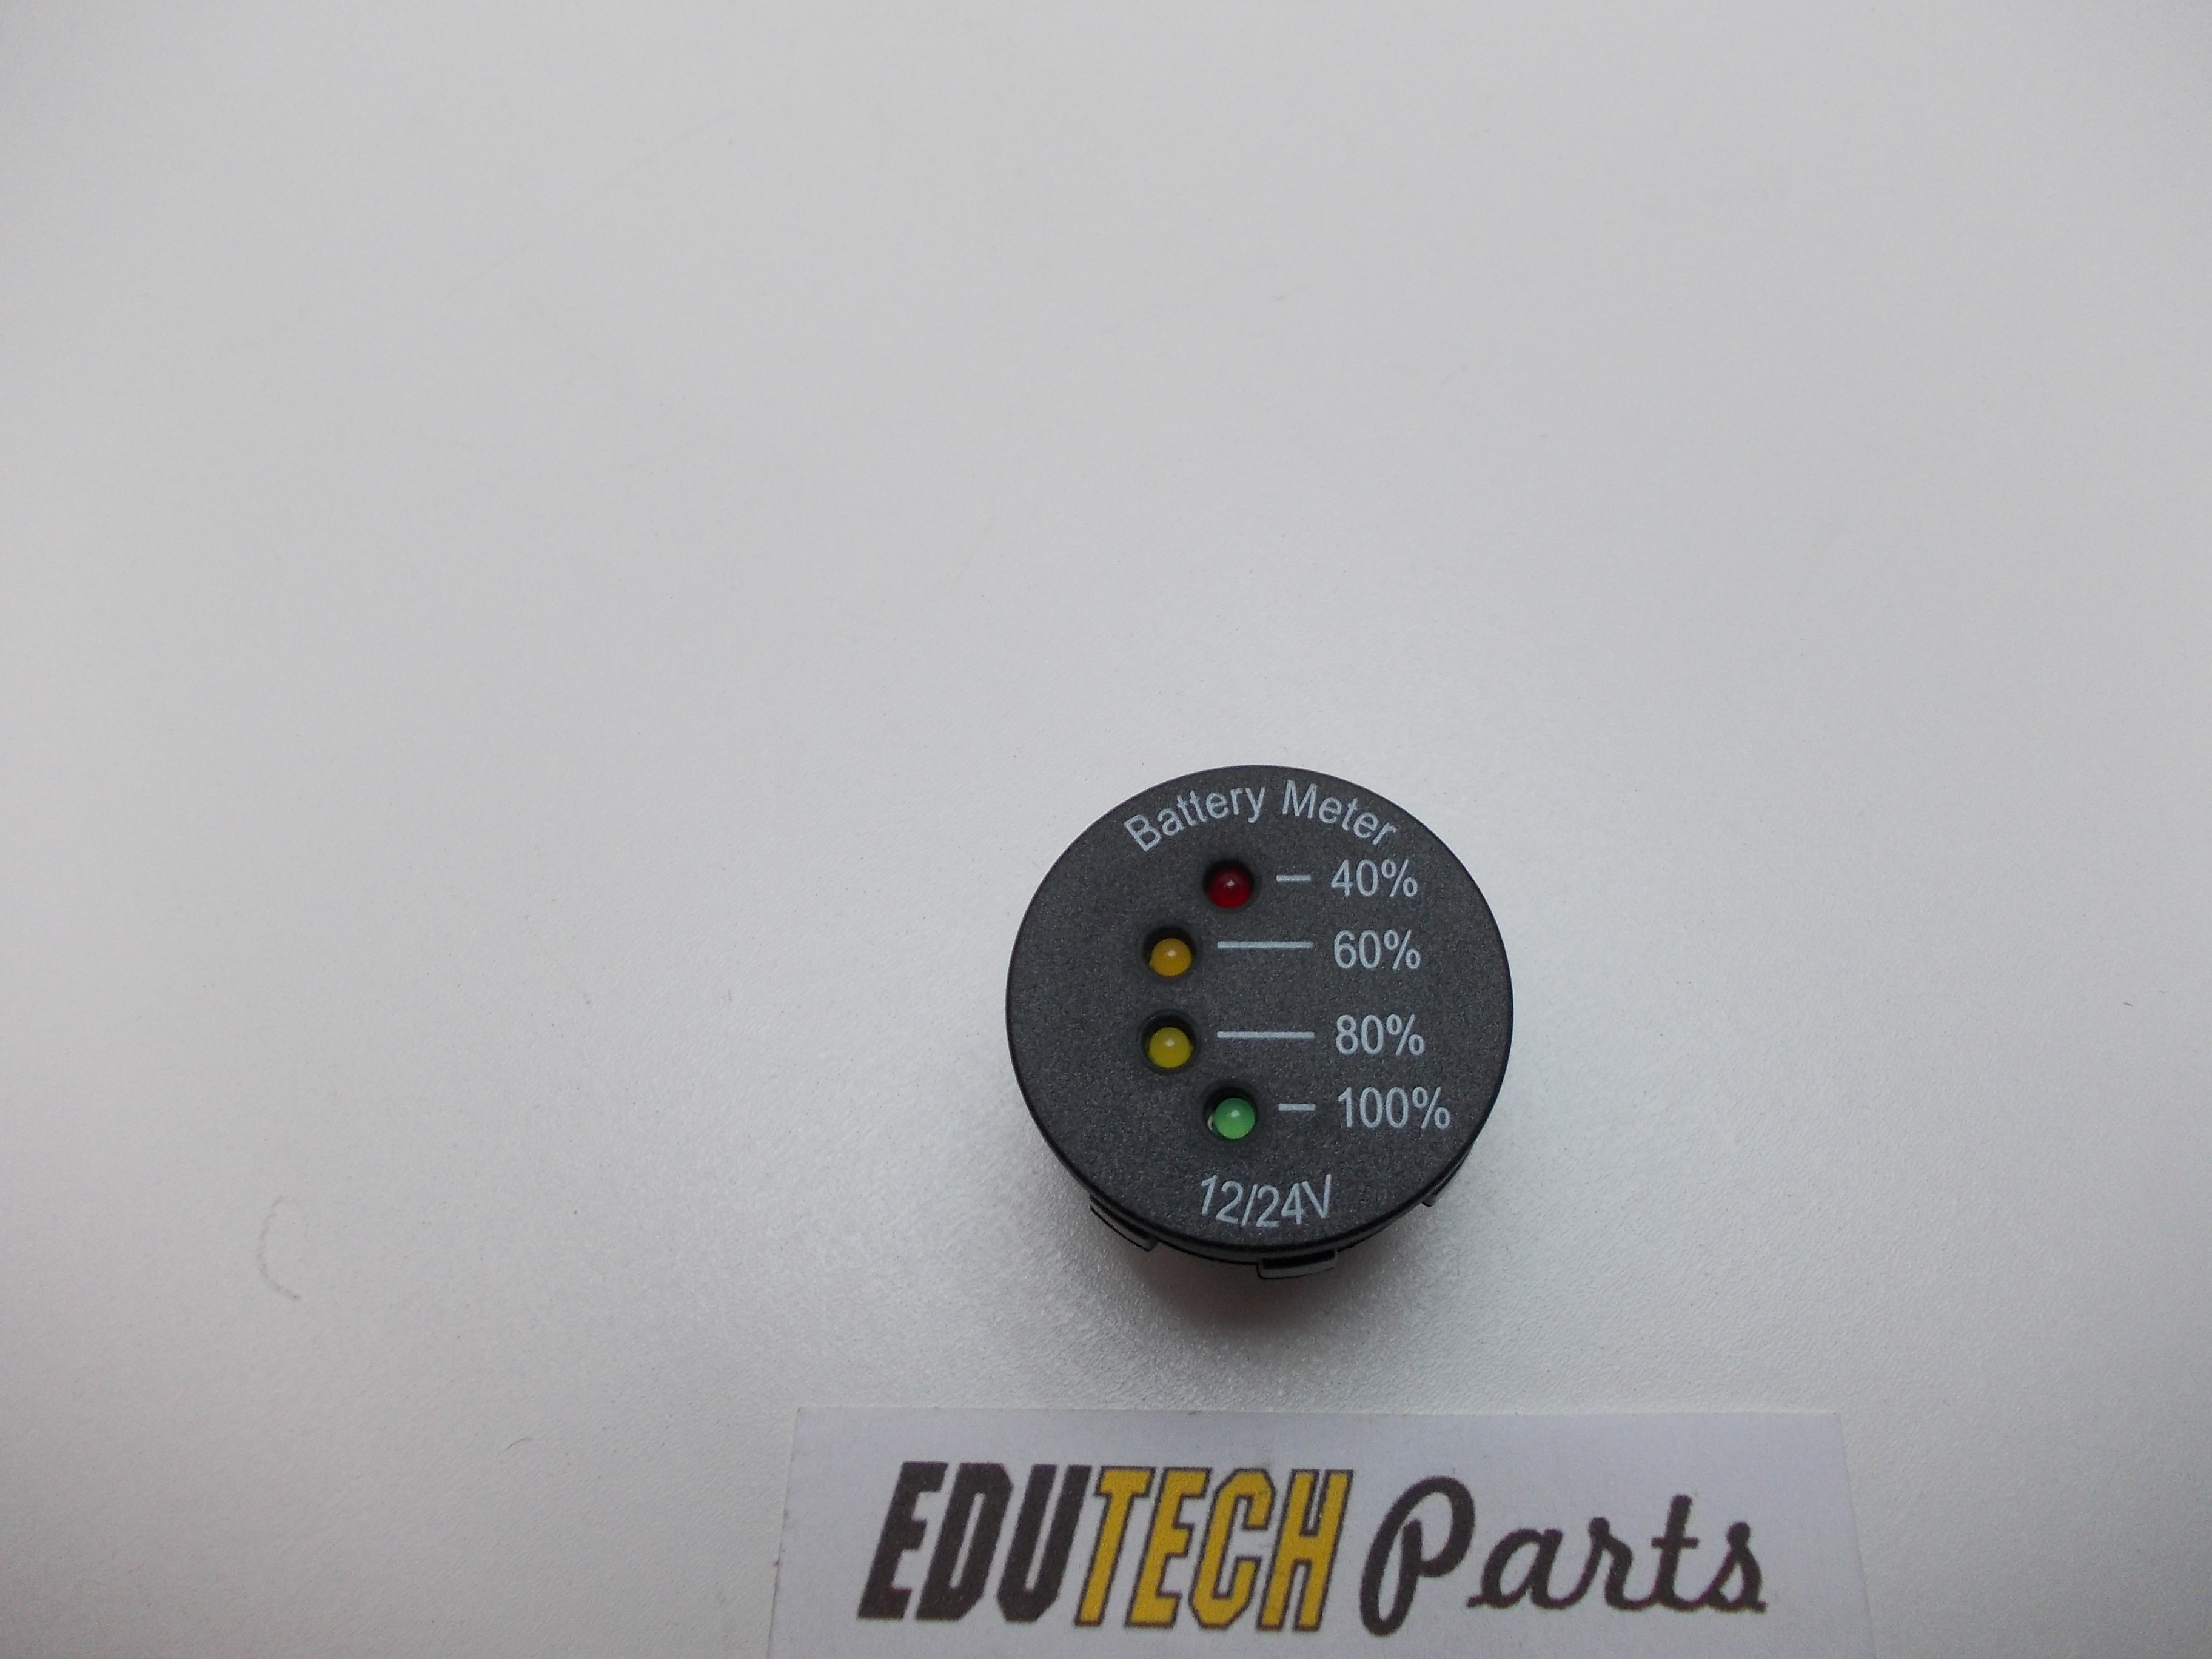 goud diepvries Microprocessor Battery Accu Voltmeter Dashboard - Edutech Parts